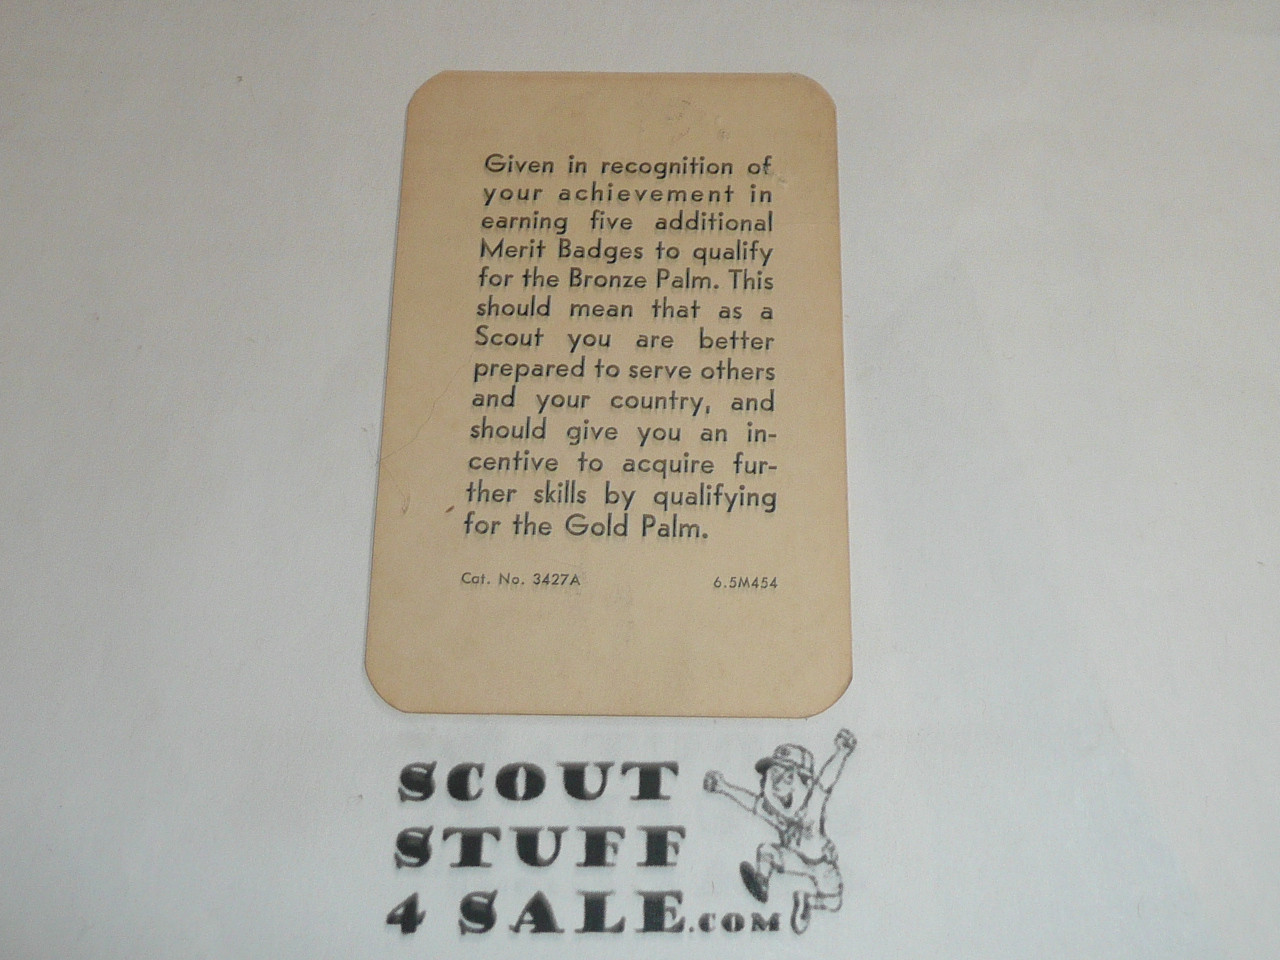 1963 Eagle Scout with Bronze Palm Rank Achievement Card, Boy Scout